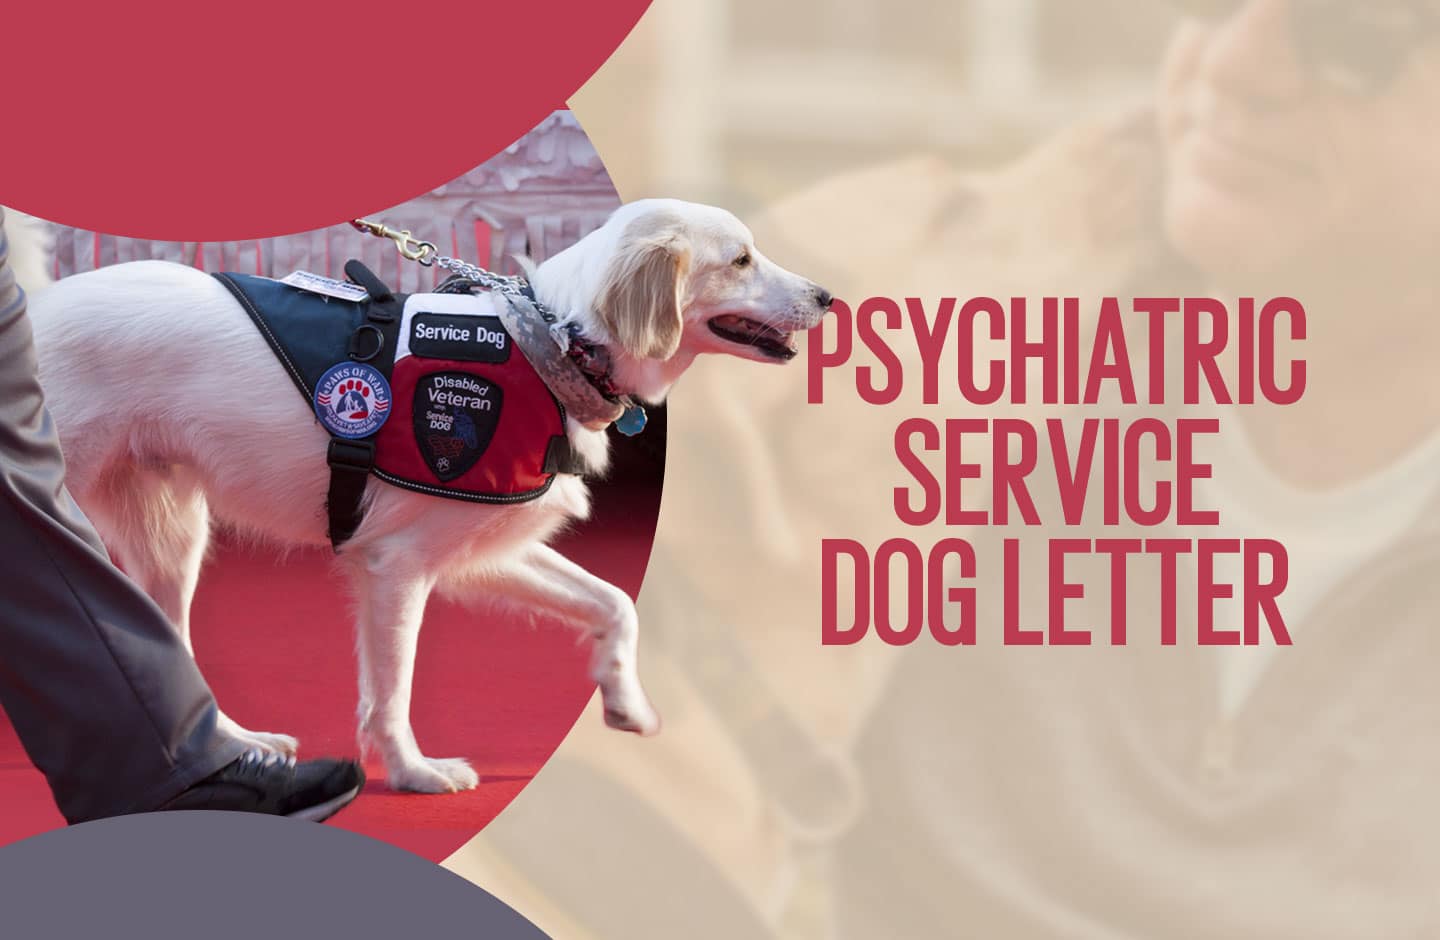 Psychiatric service dog letter